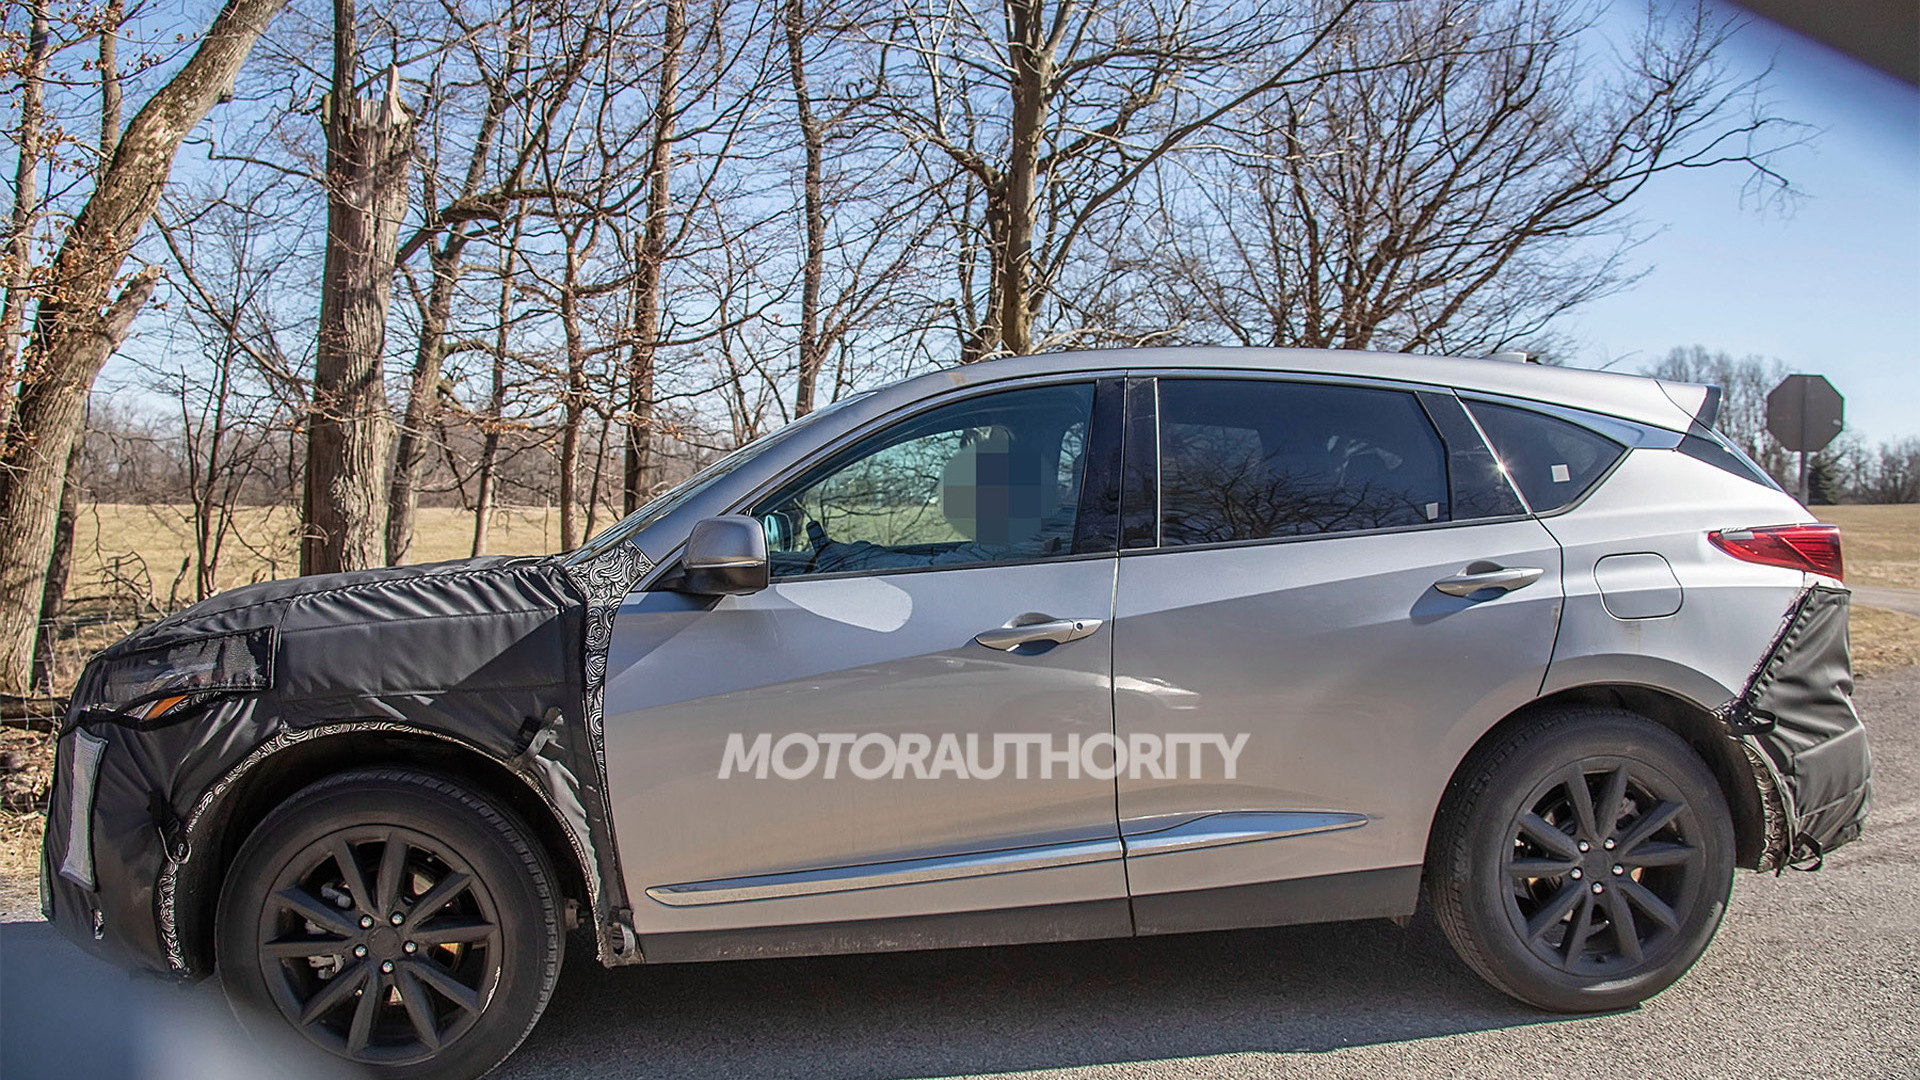 2022 Acura RDX facelift spy shots - Photo credit: S. Baldauf/SB-Medien